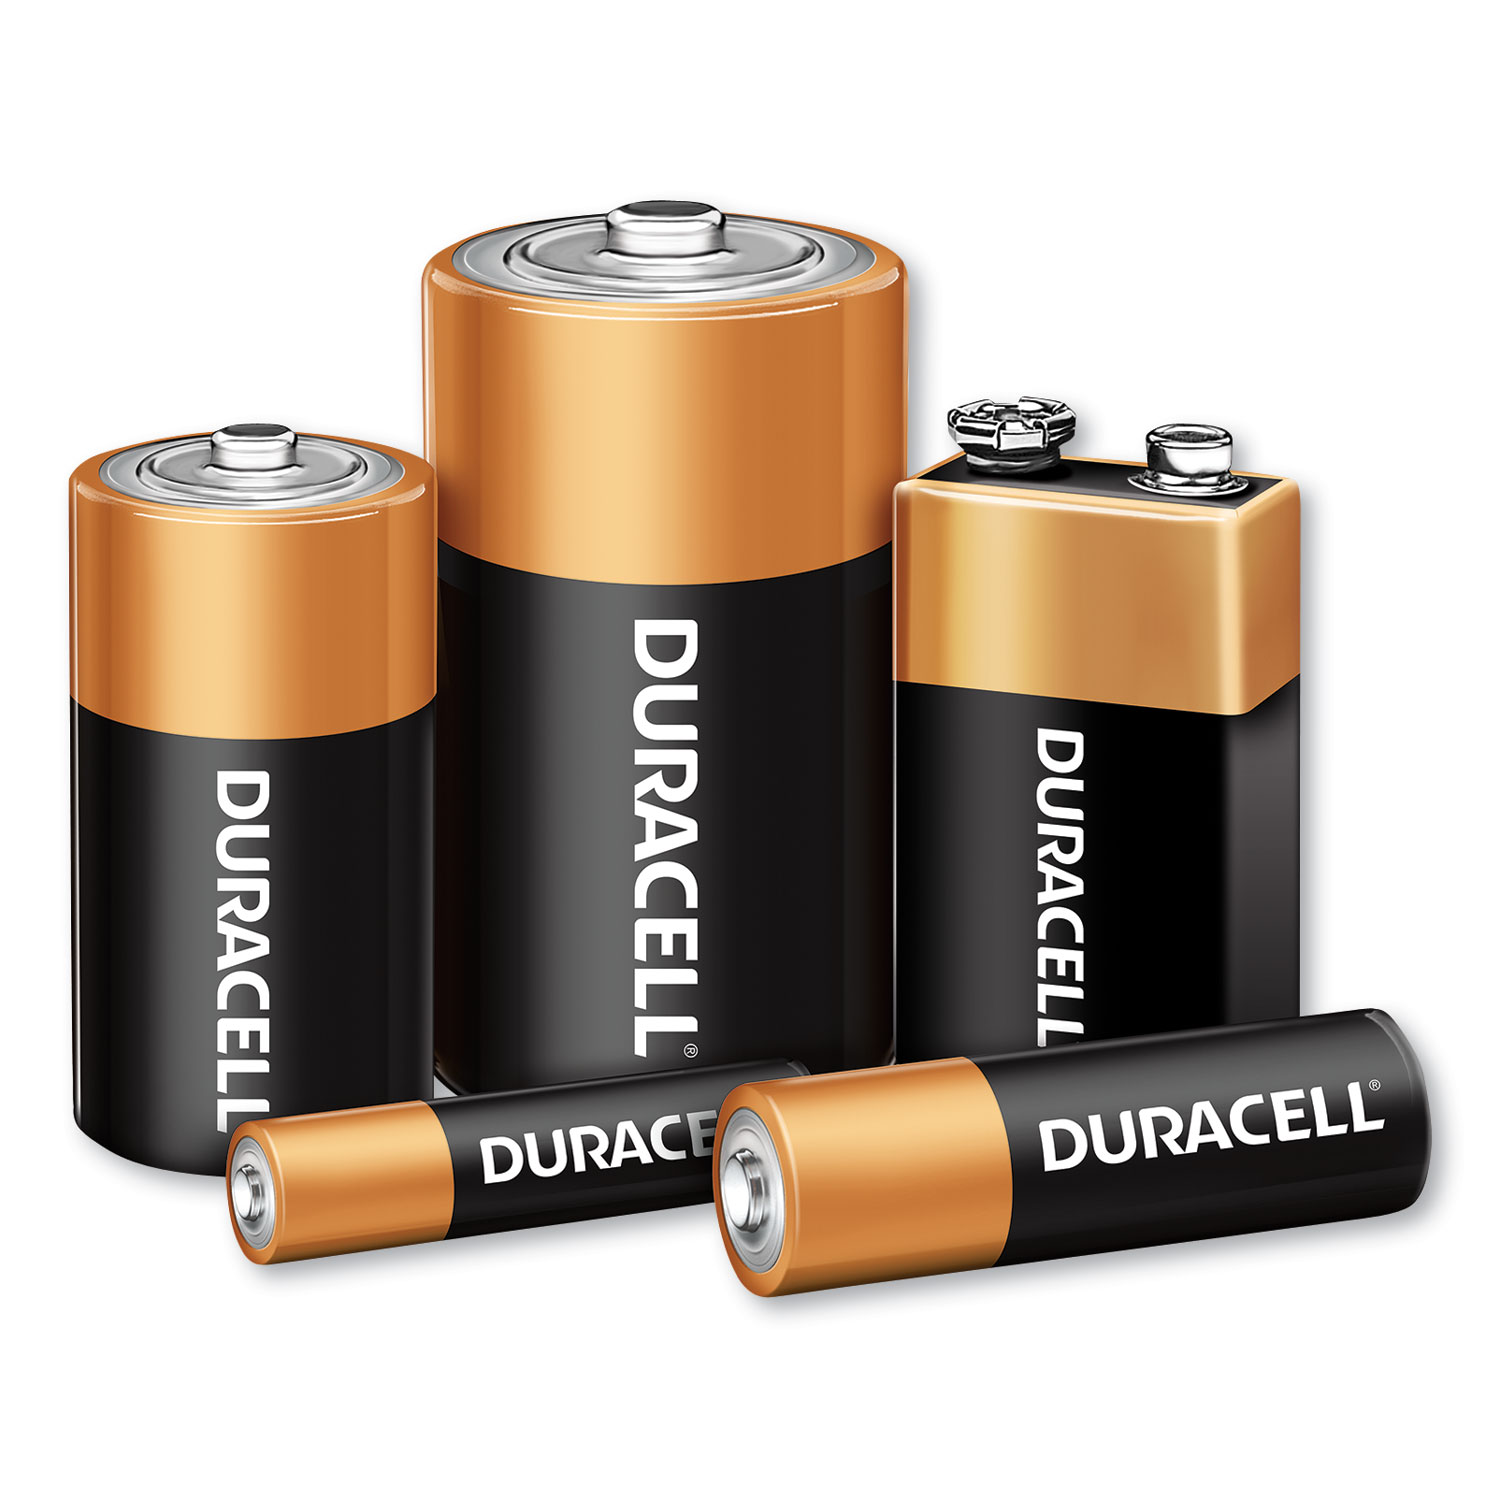 Batteries 